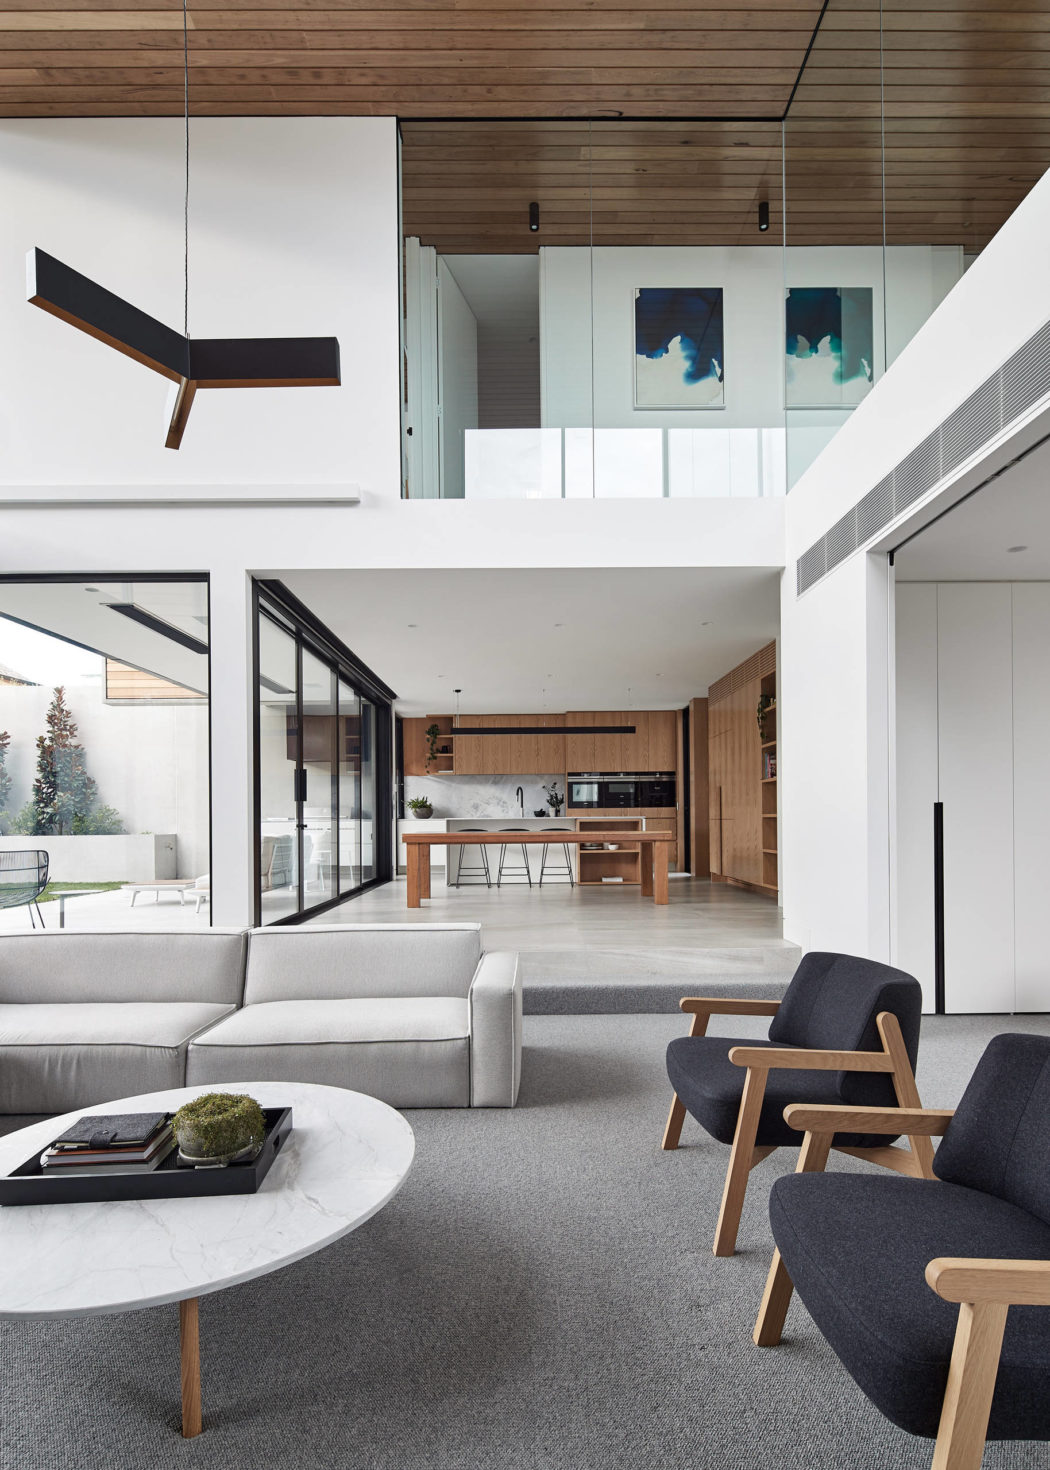 Sleek, modern interior with wood paneling, glass walls, and minimalist furniture.